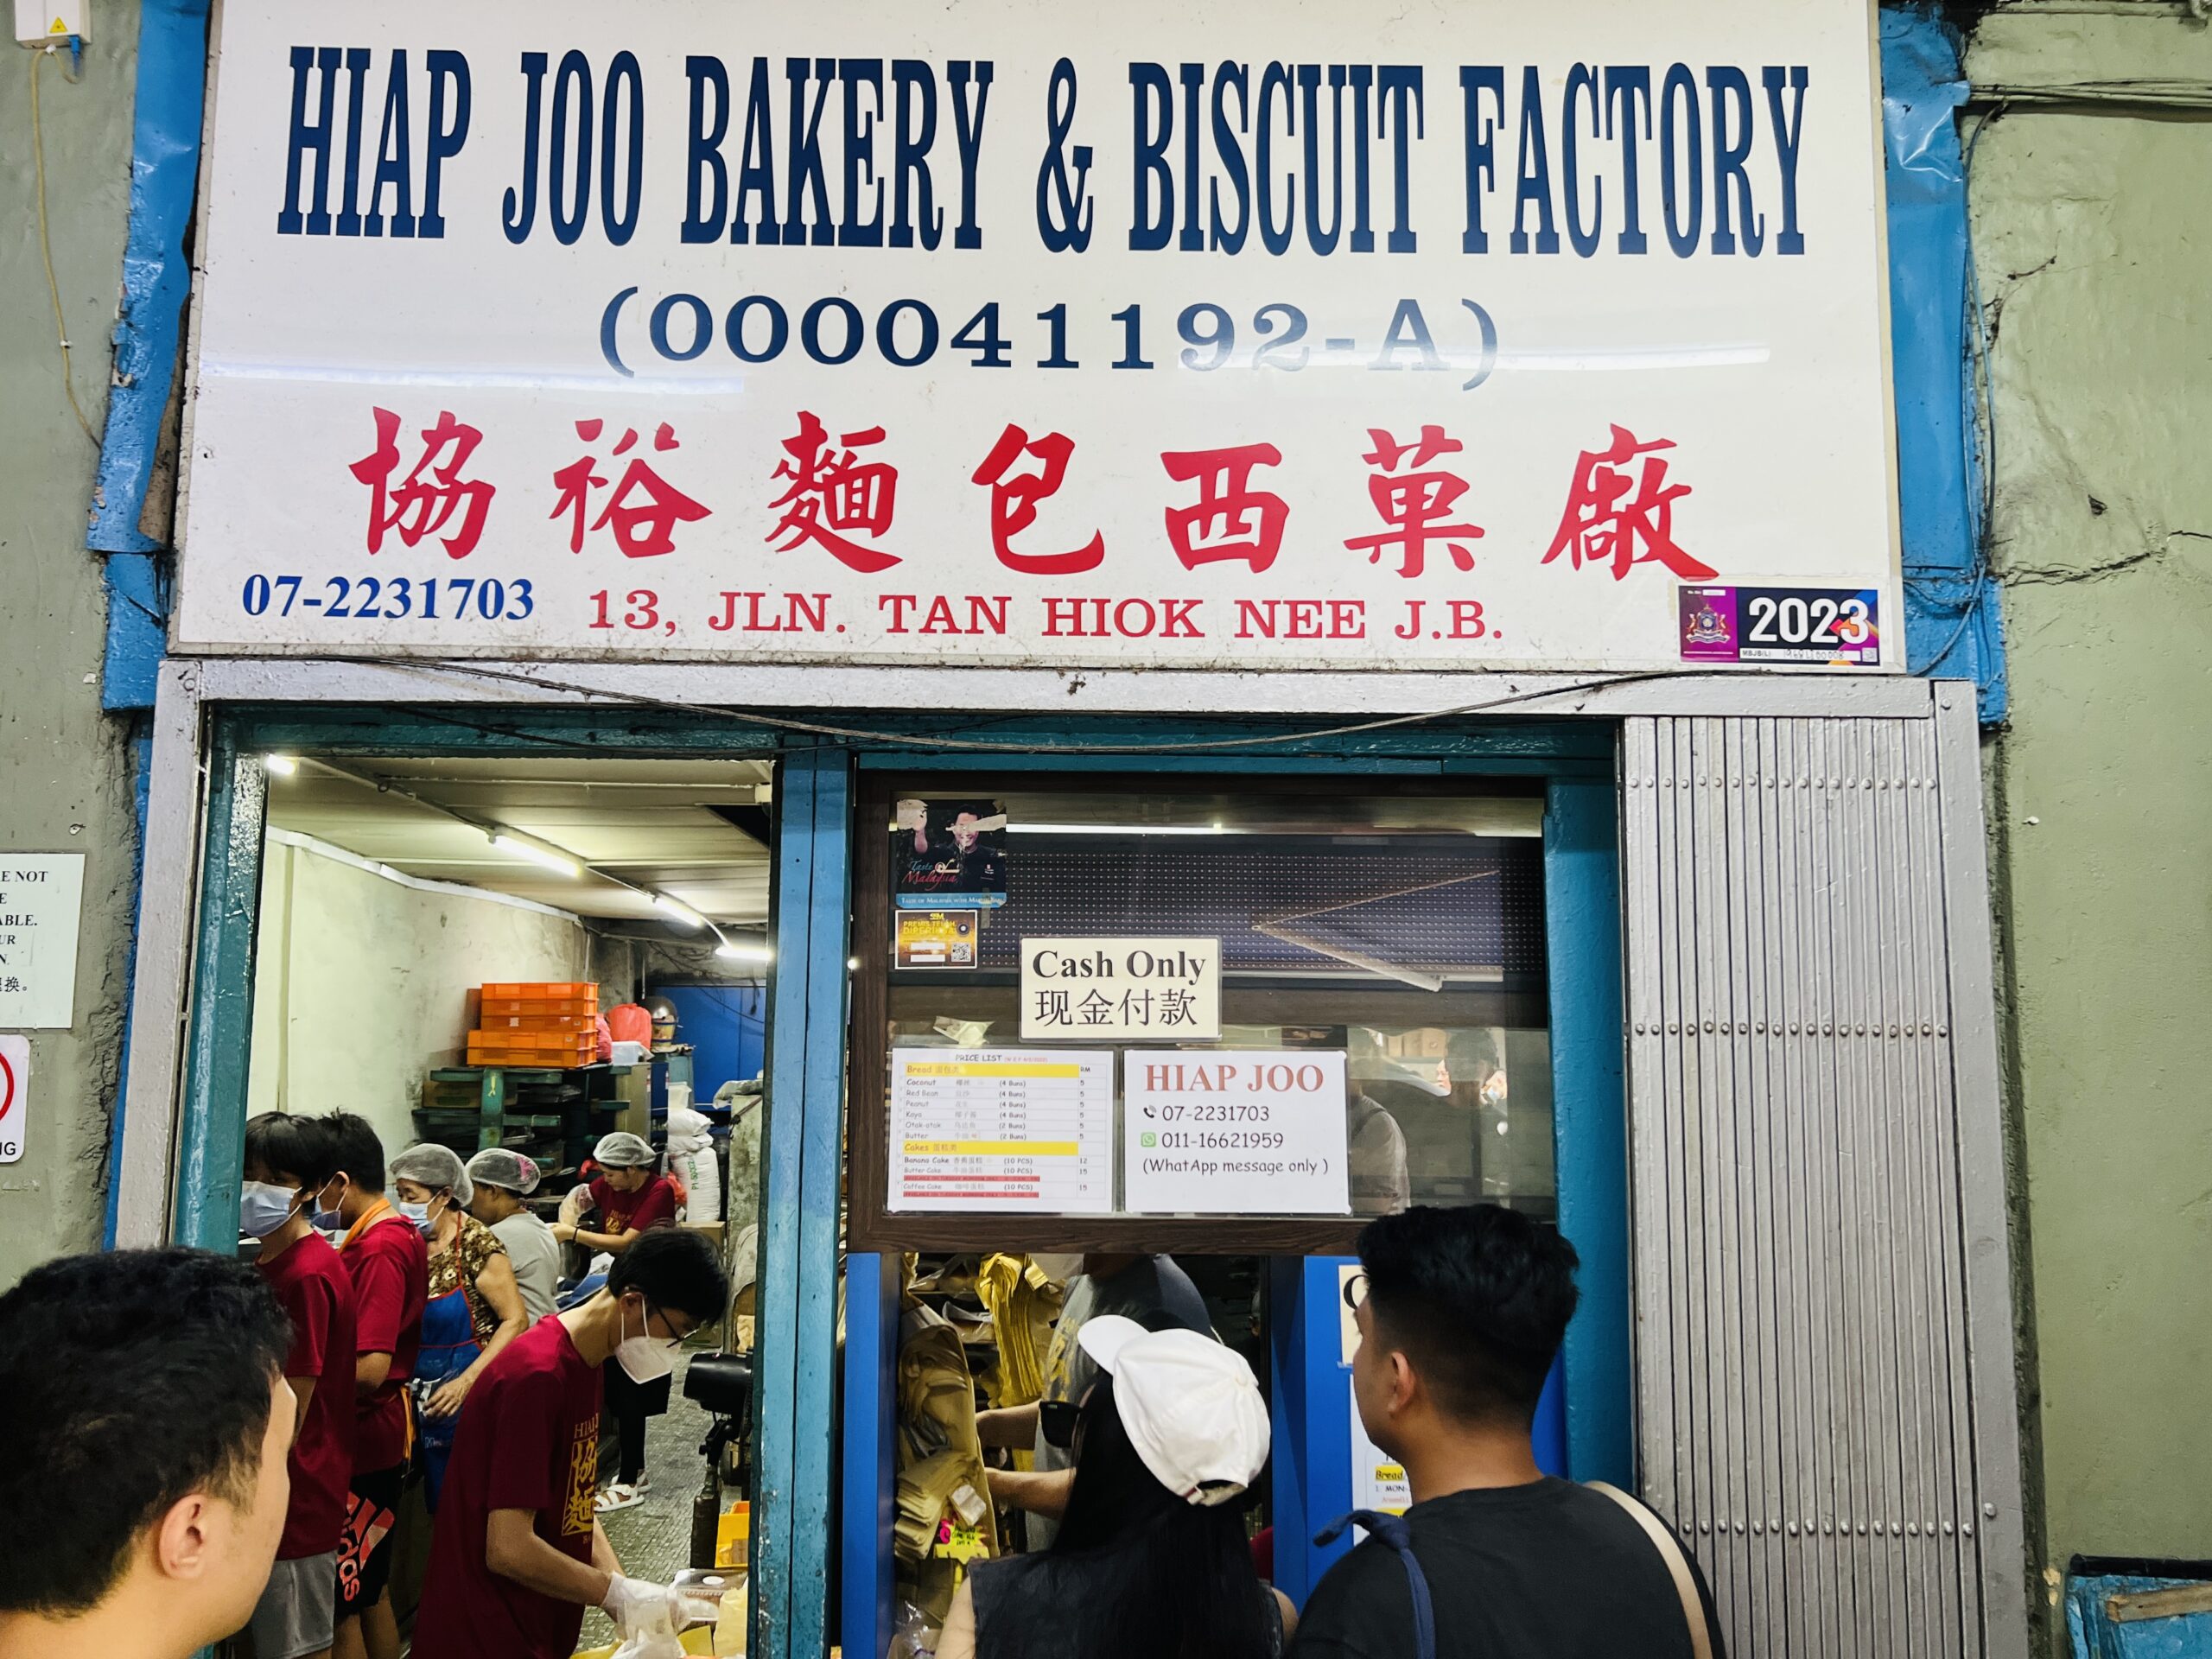 Hiap Joo Bakery & Biscuit Factory 協裕麵包西菓廠 1